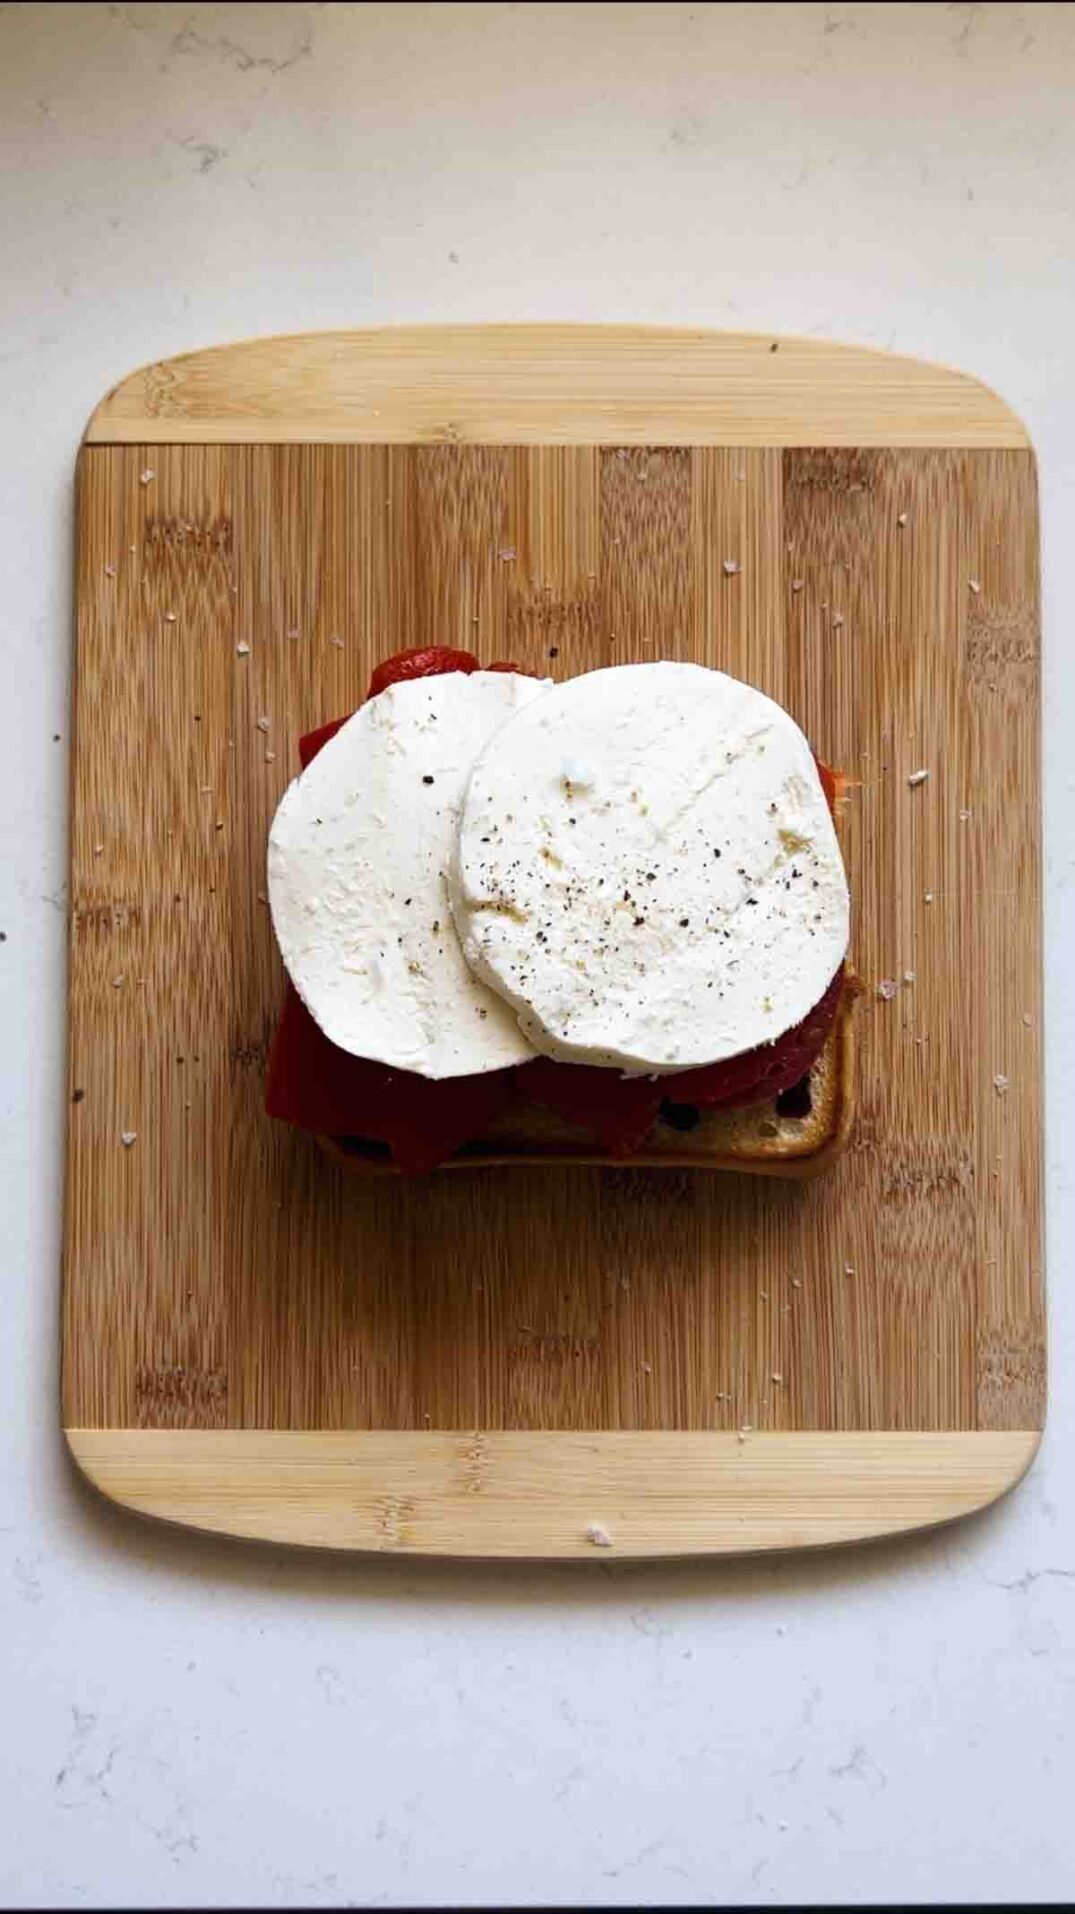 mozzarella with salt and pepper on ciabatta bread on a cutting board.